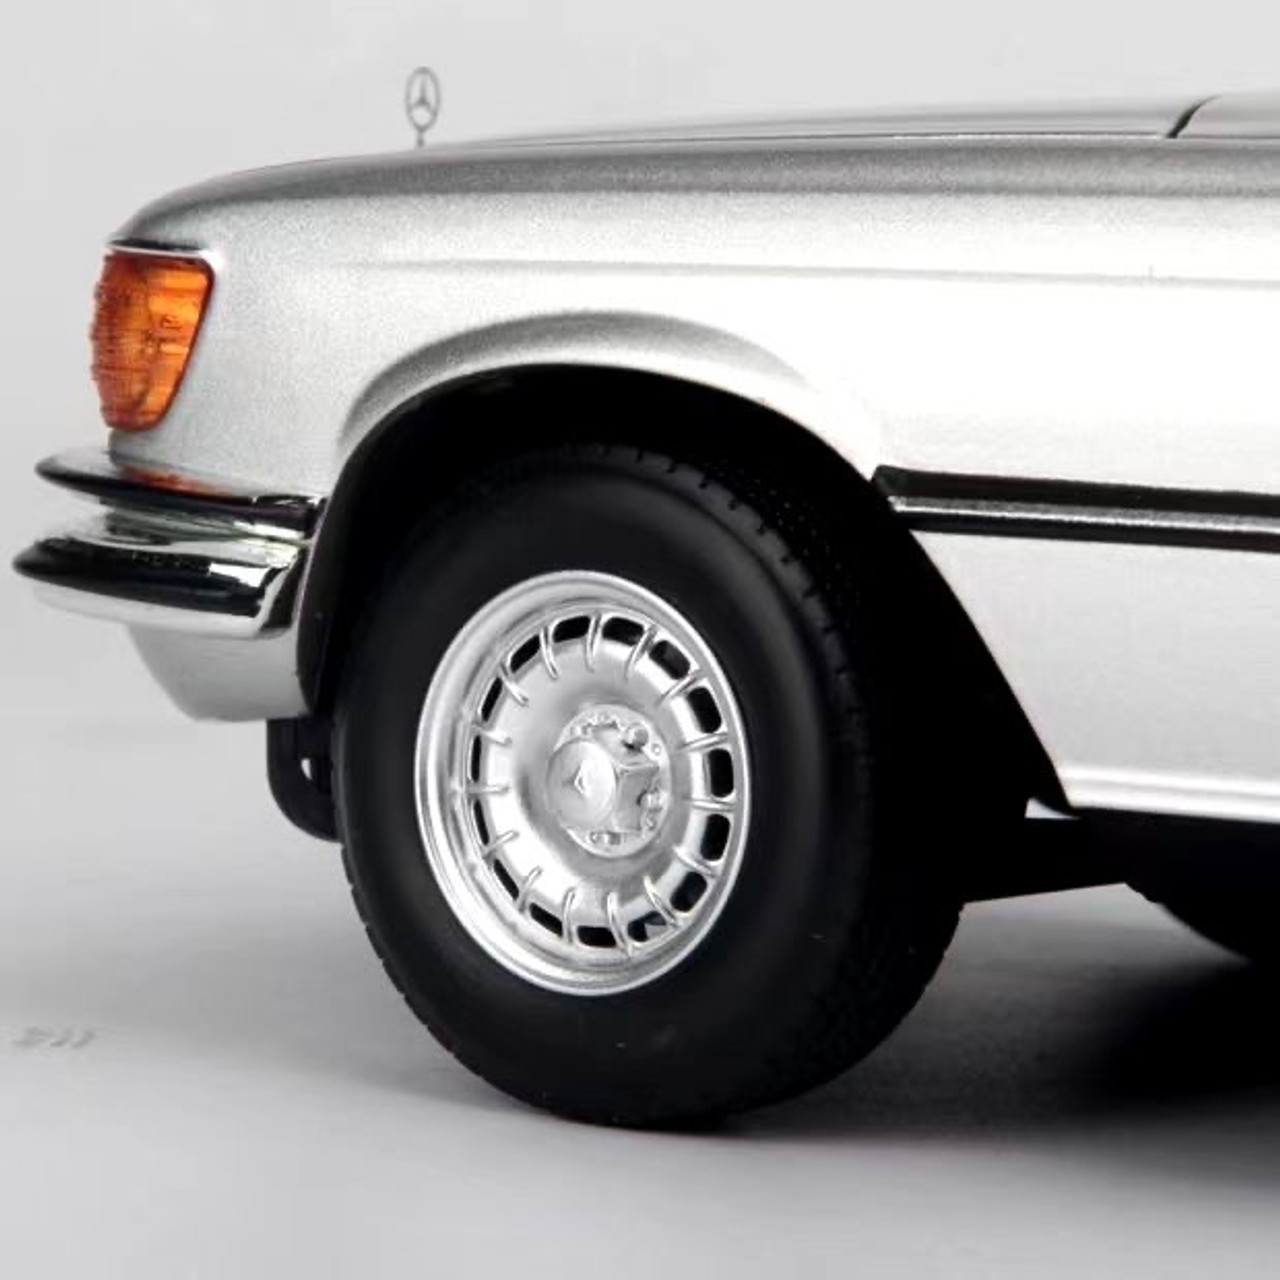 1/18 Norev 1976 Mercedes-Benz 450 SEL 6.9 (Silver) Diecast Model Car